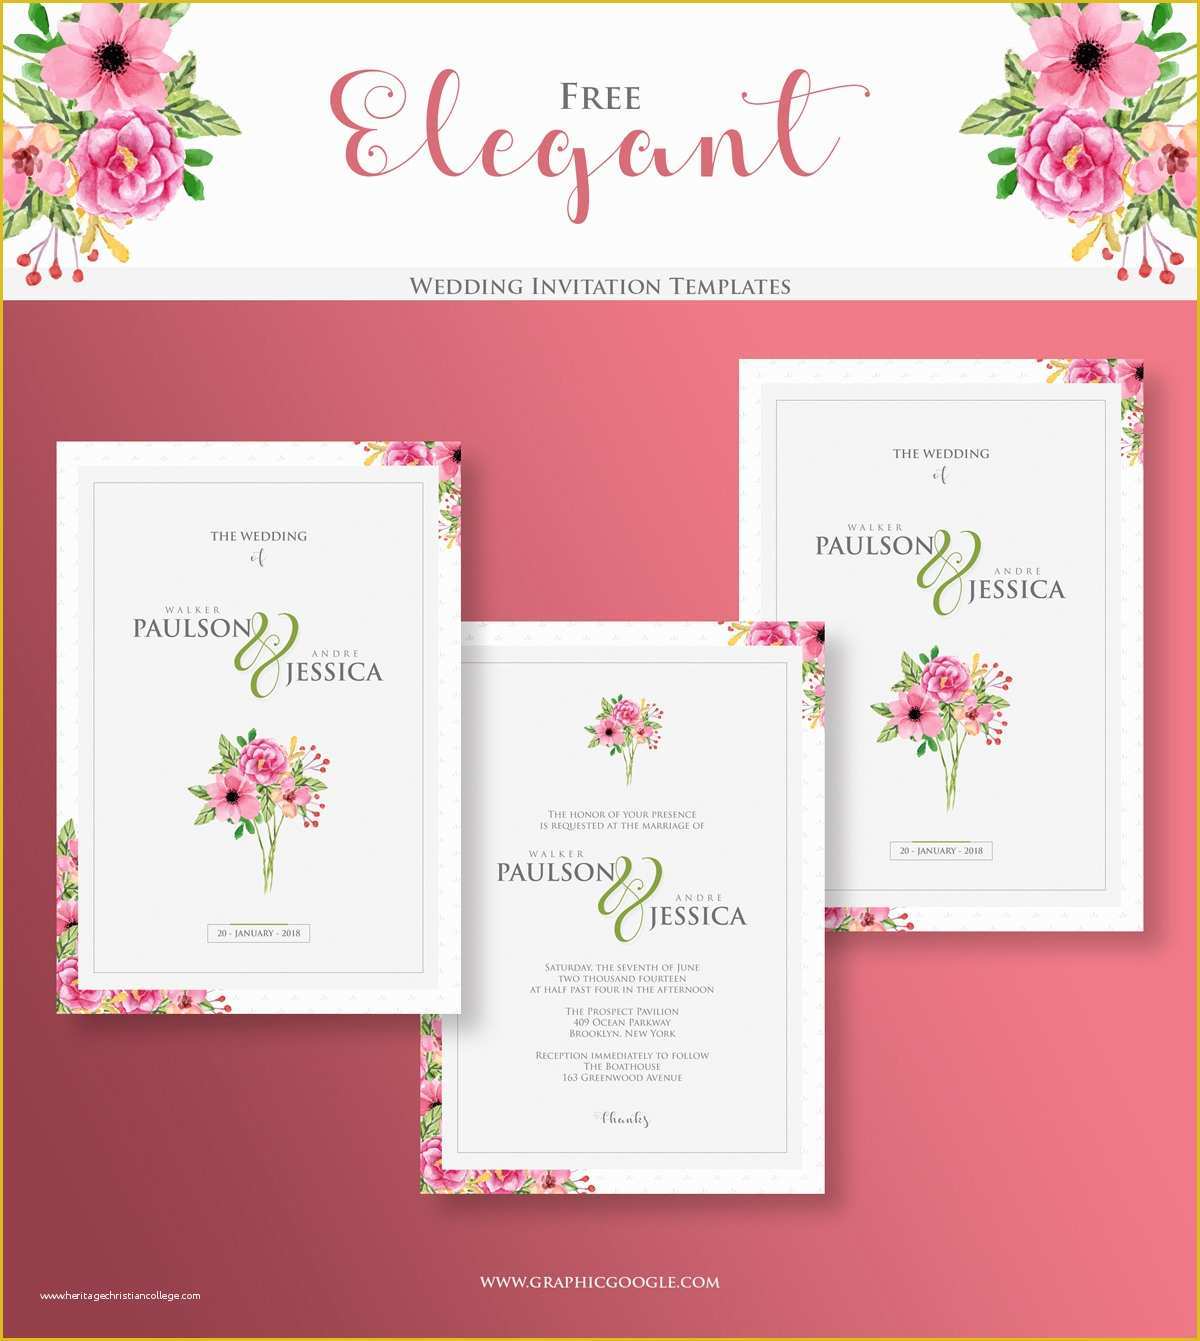 Free Printable Wedding Invitation Templates Of Elegant Wedding Free Invitation Templates Engine Templates